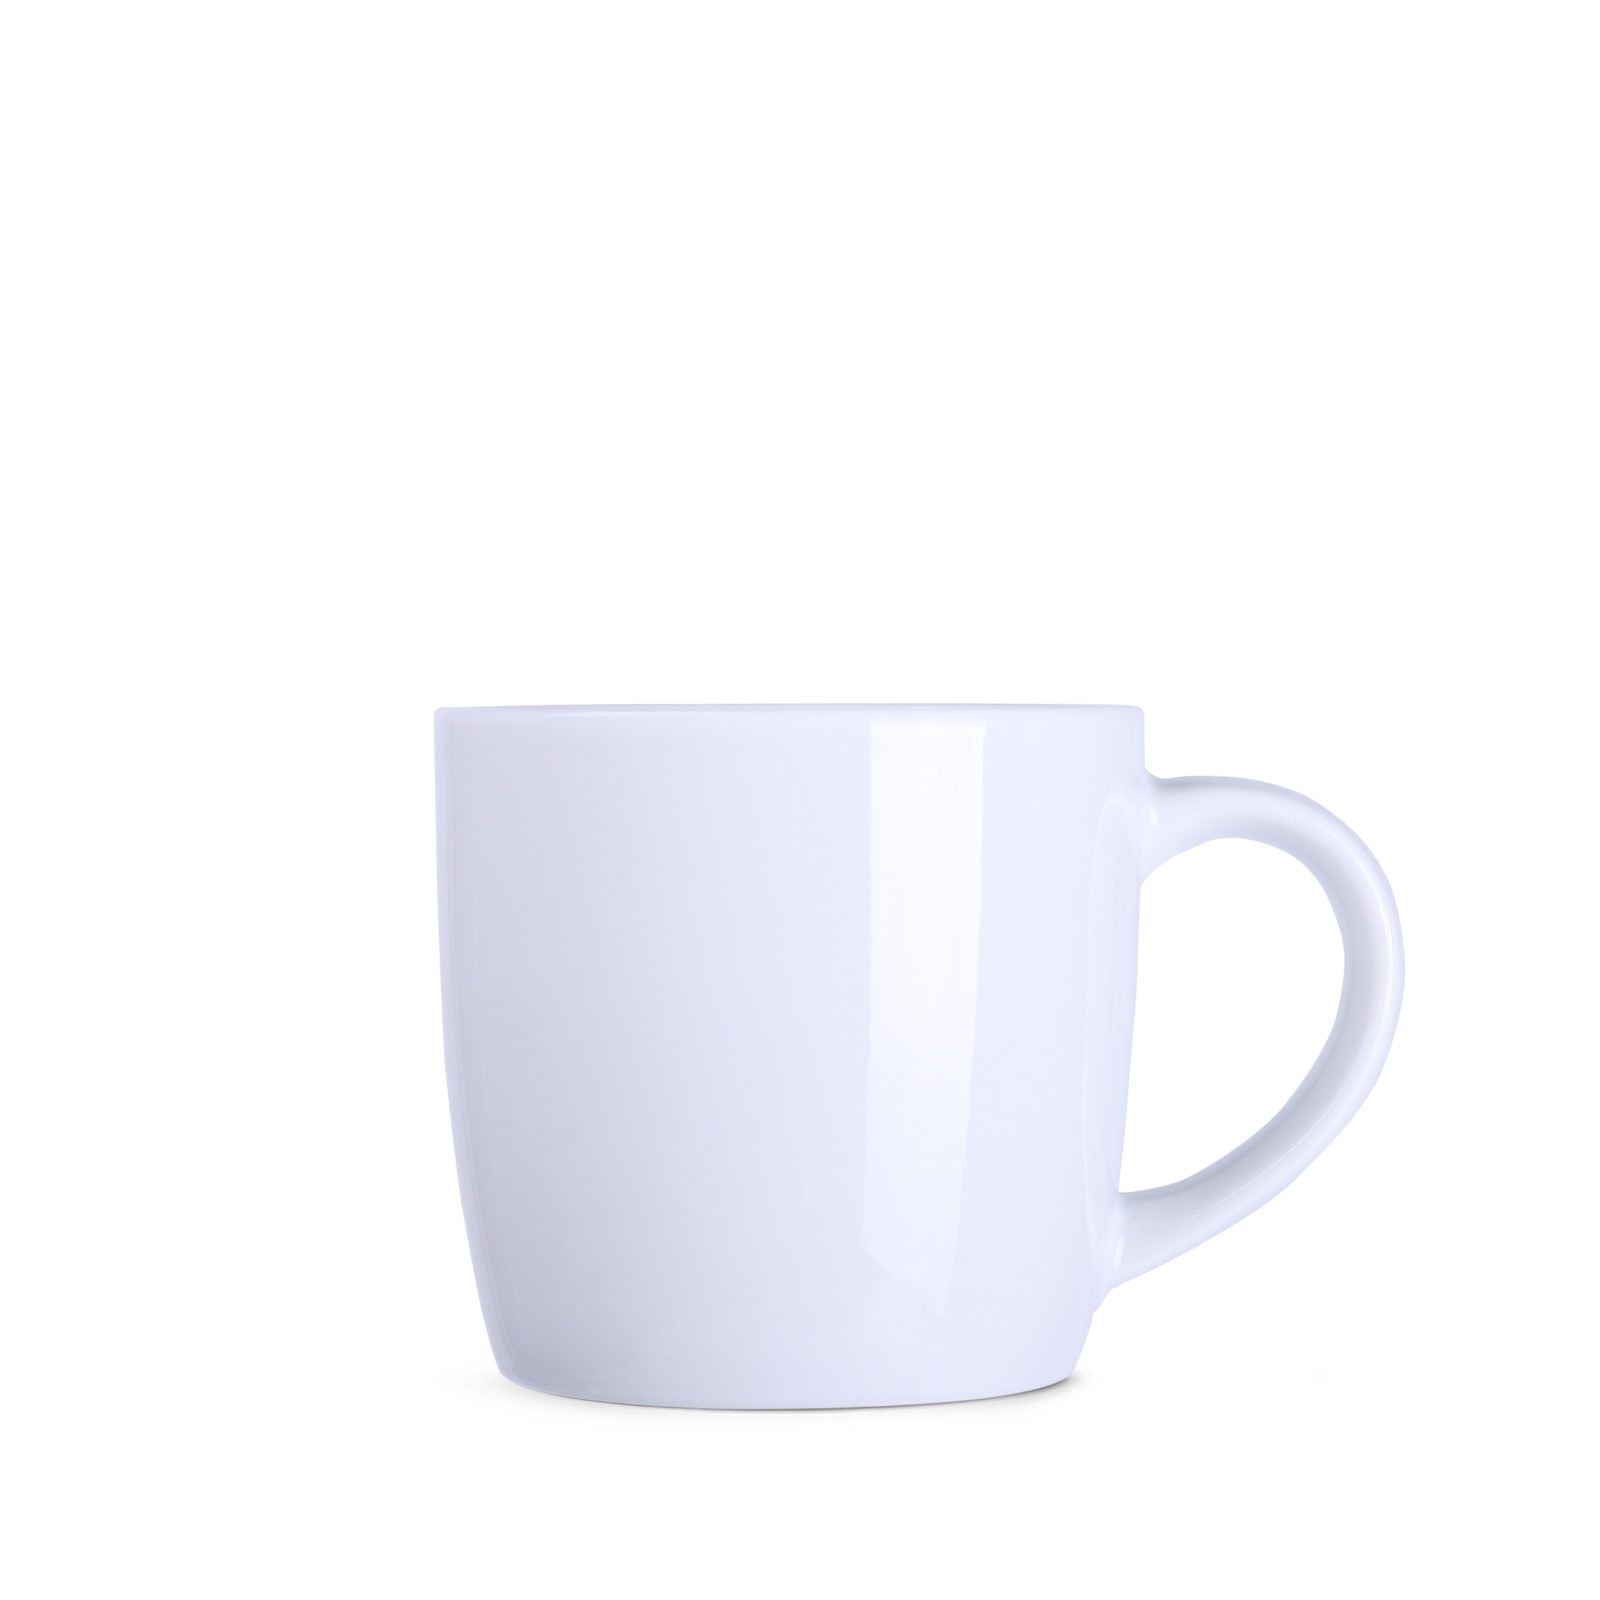 mug handy 300ml with logo